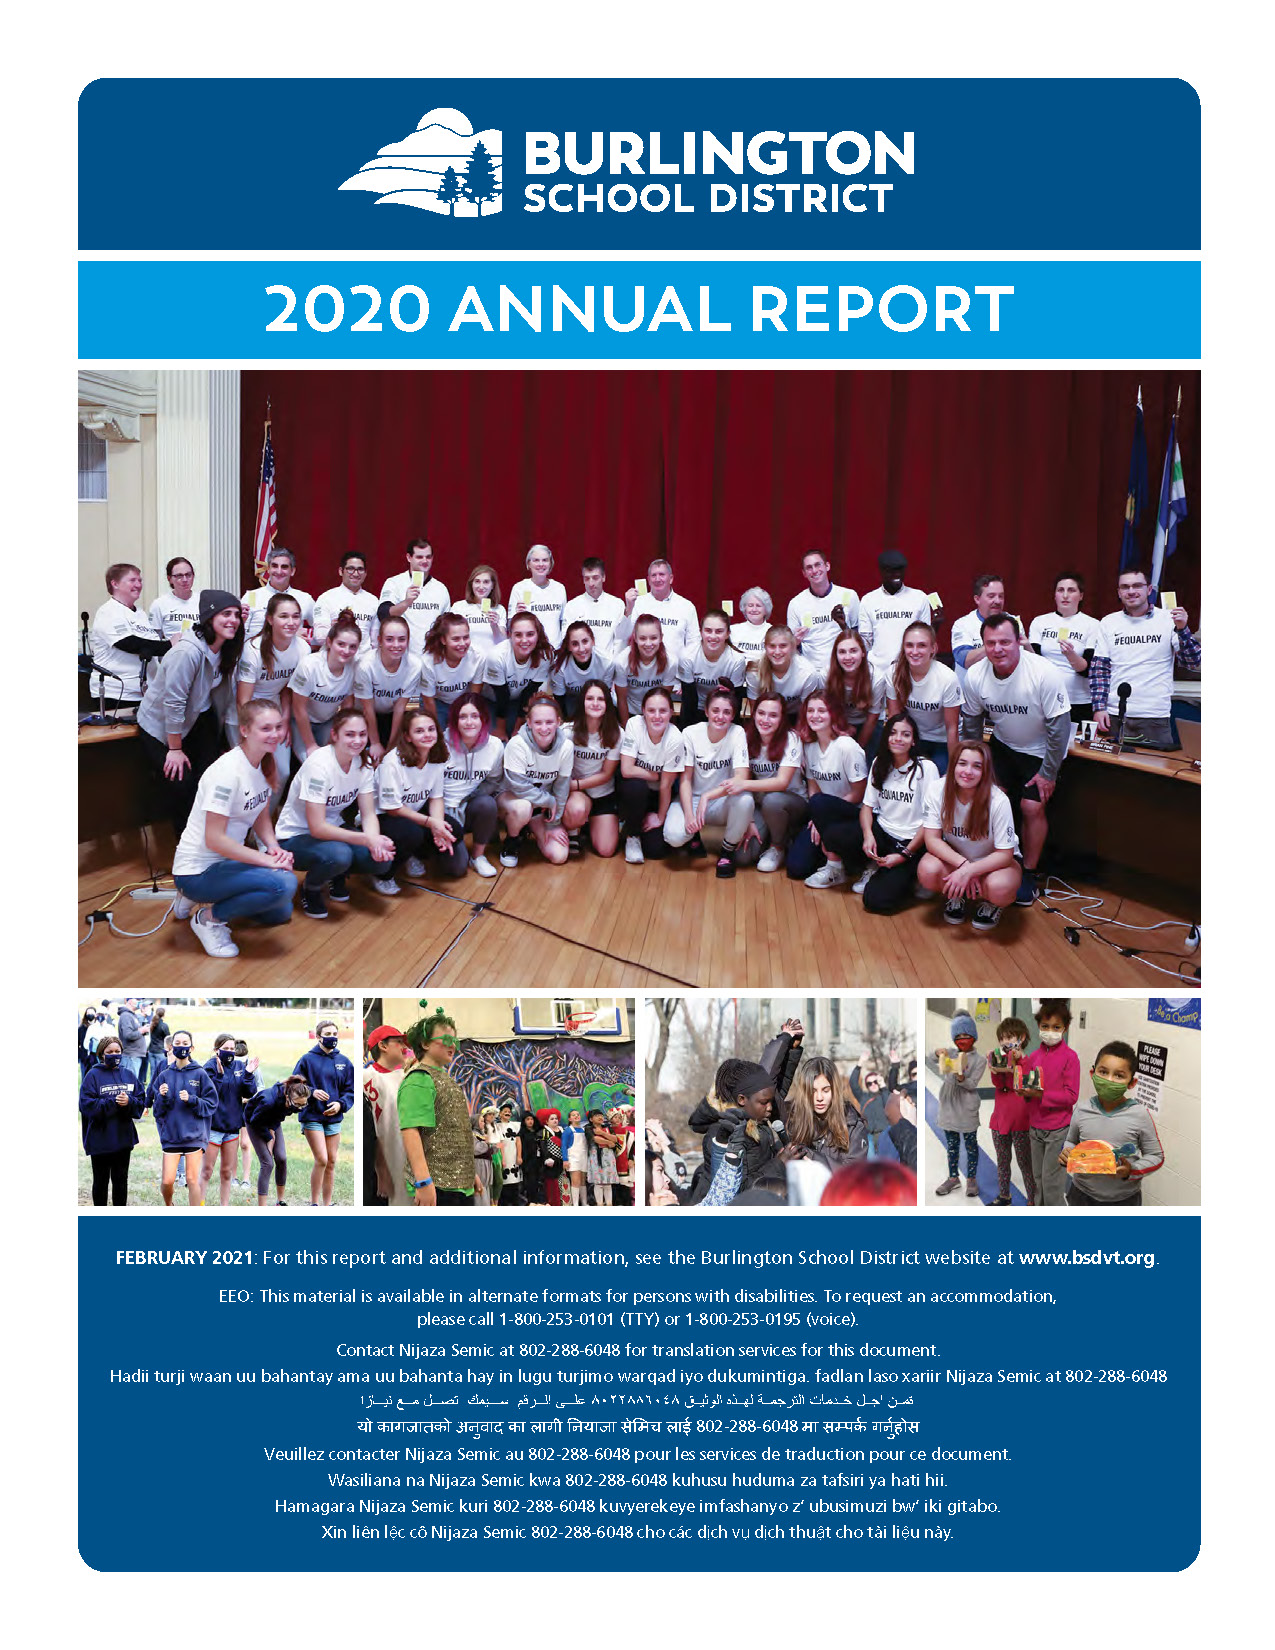 2020-Annual-Report-Cover-